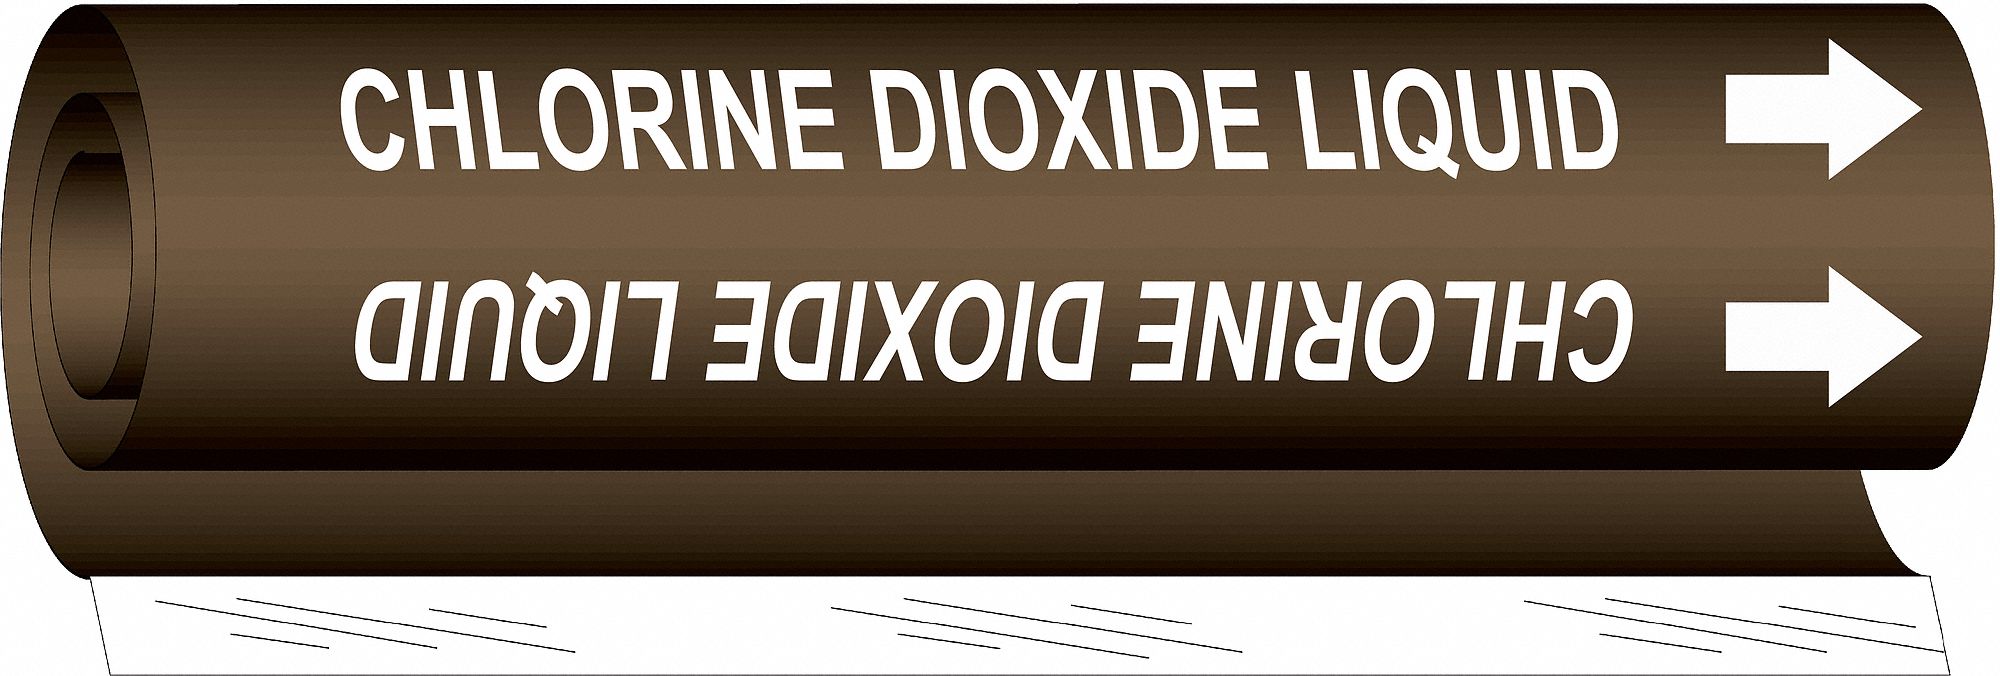 Pipe Marker,Chlorine Dioxide Liquid